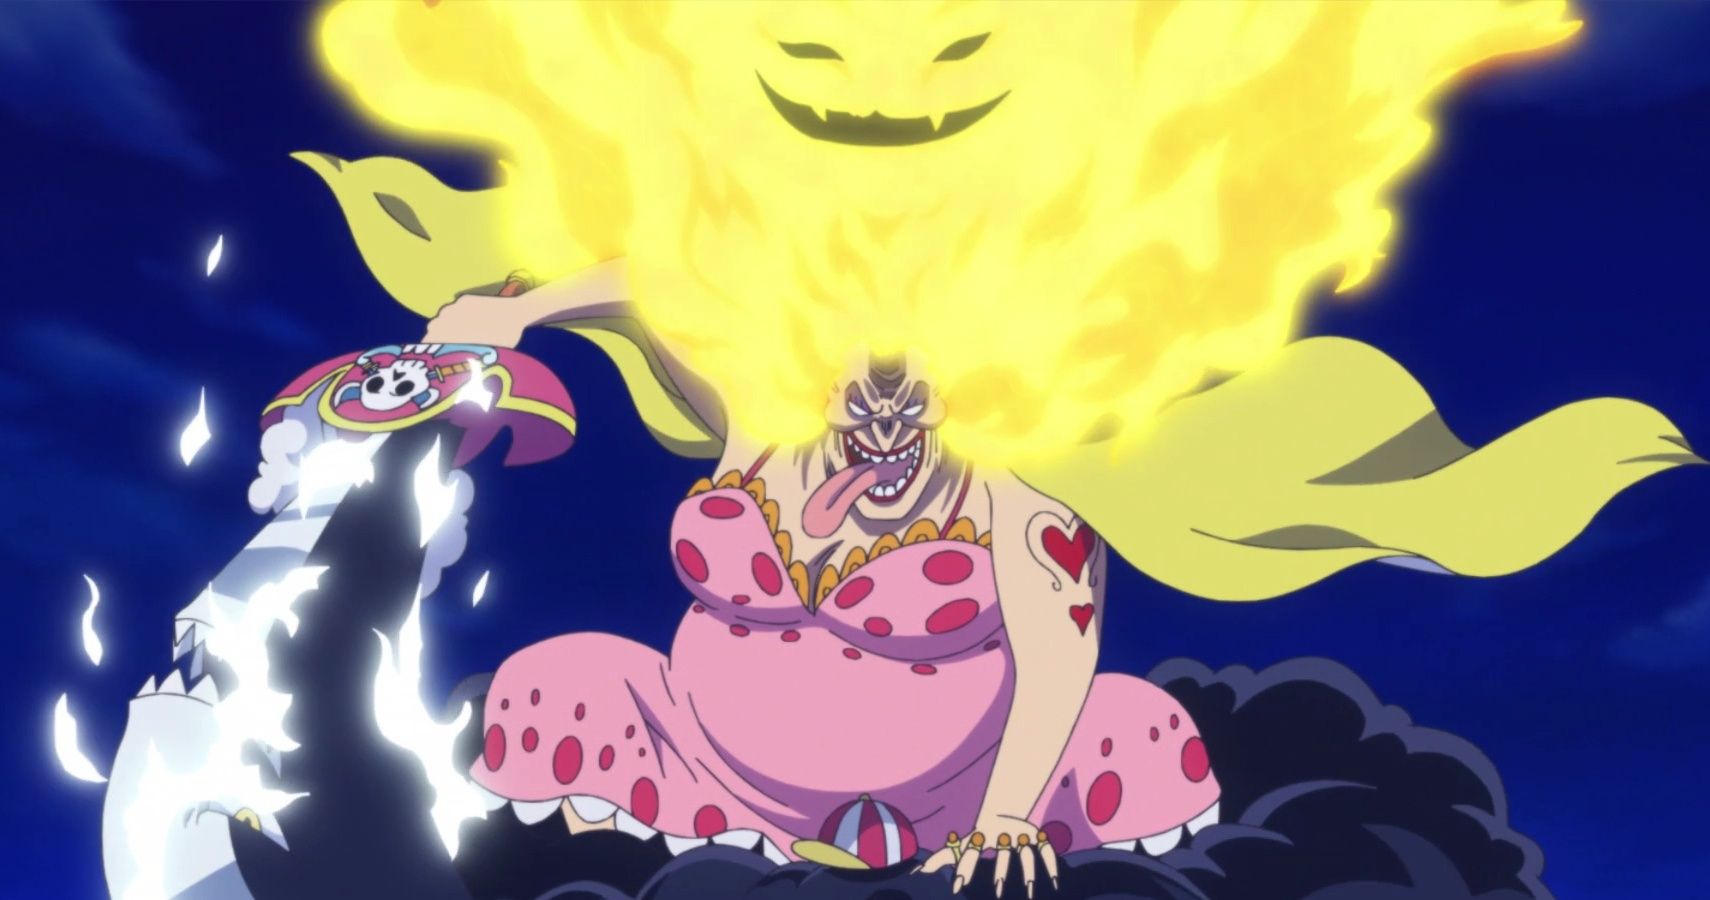 Enraged Big Mom riding Zeus in One Piece.